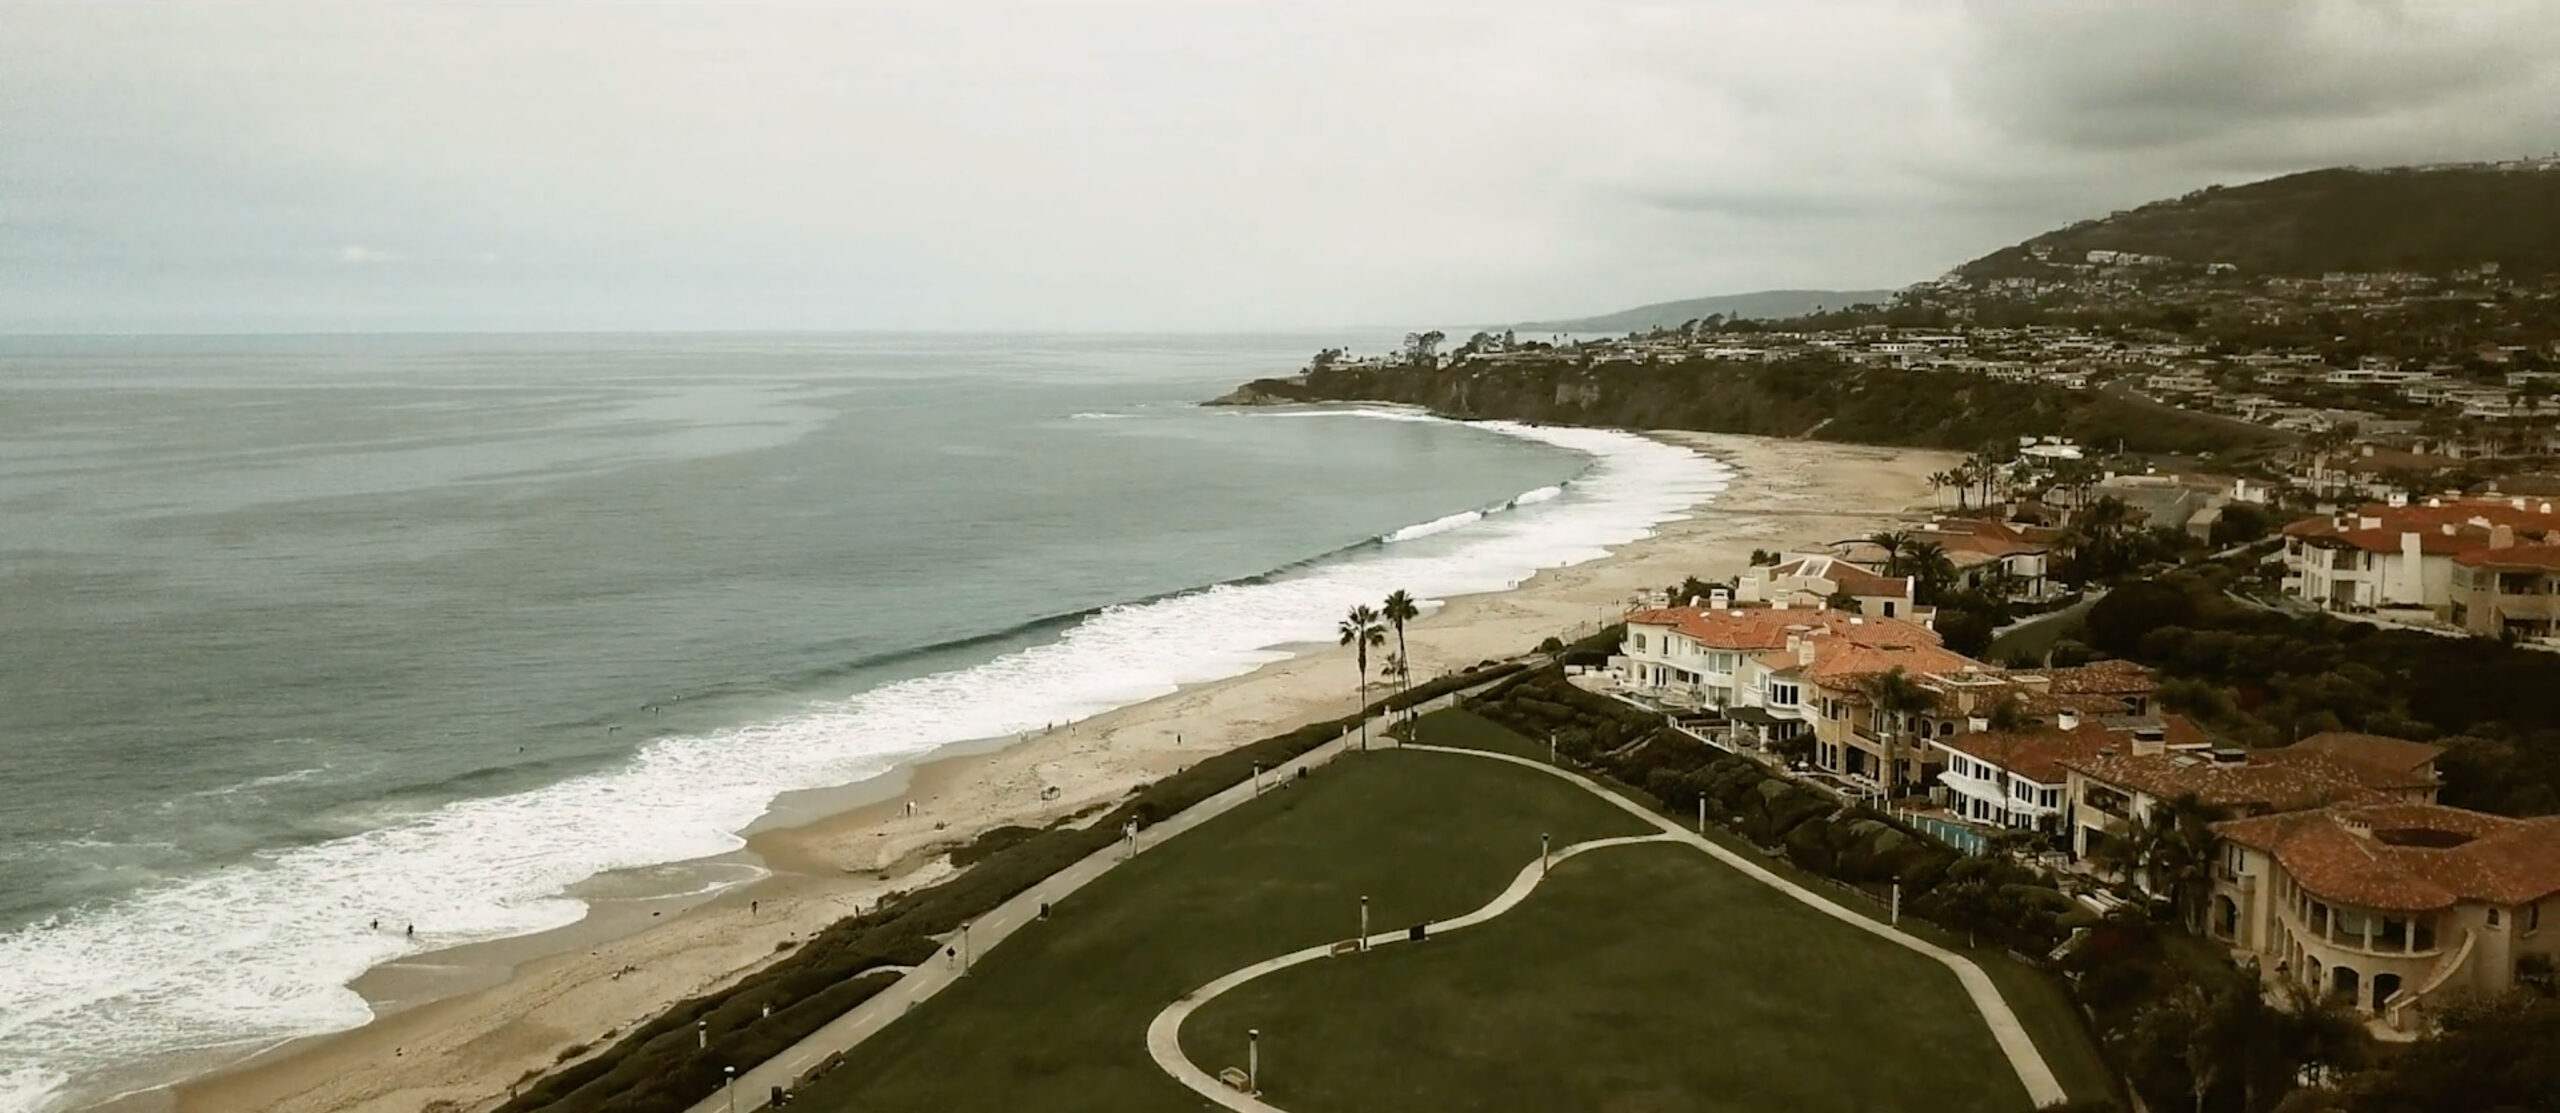 The Ritz-Carlton Laguna Niguel Drone Shot